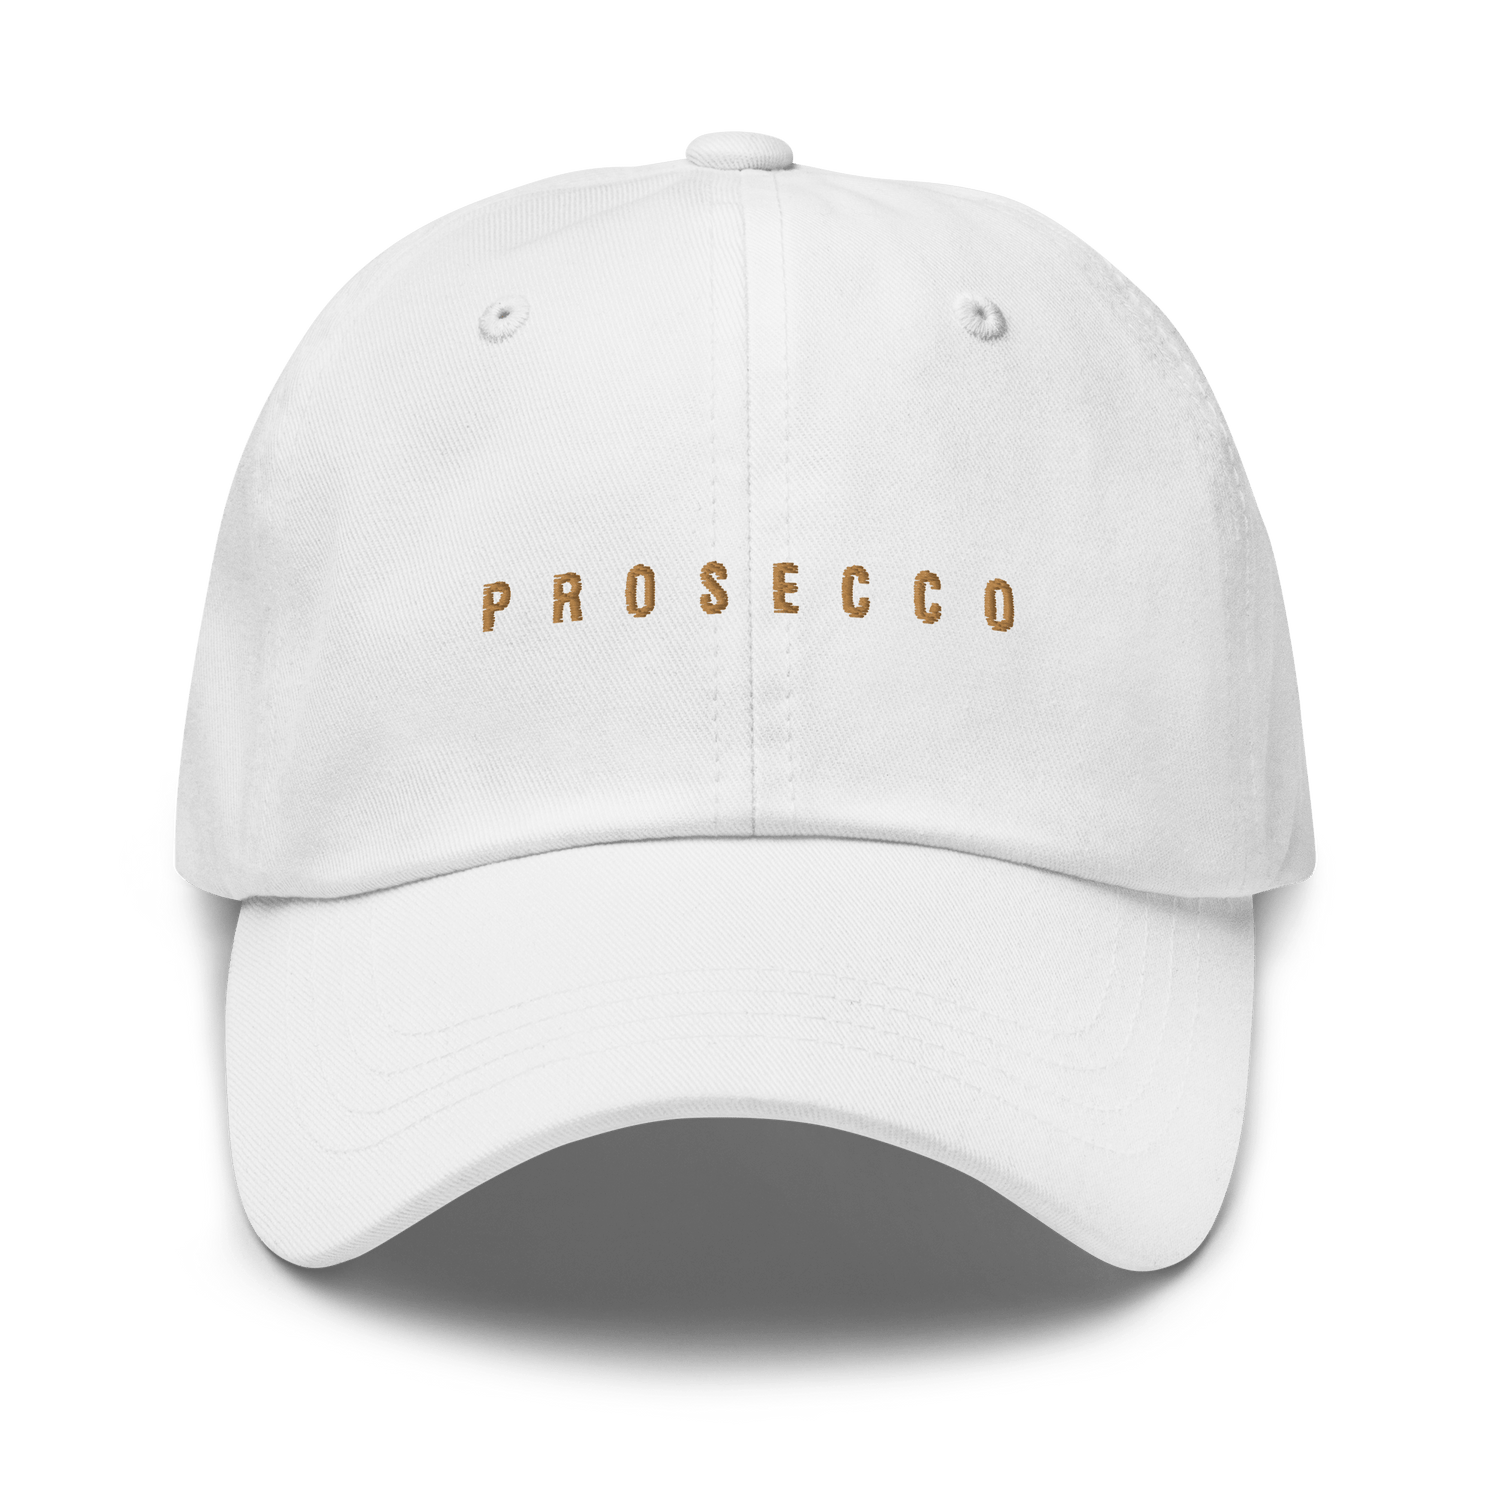 Die Prosecco Kappe